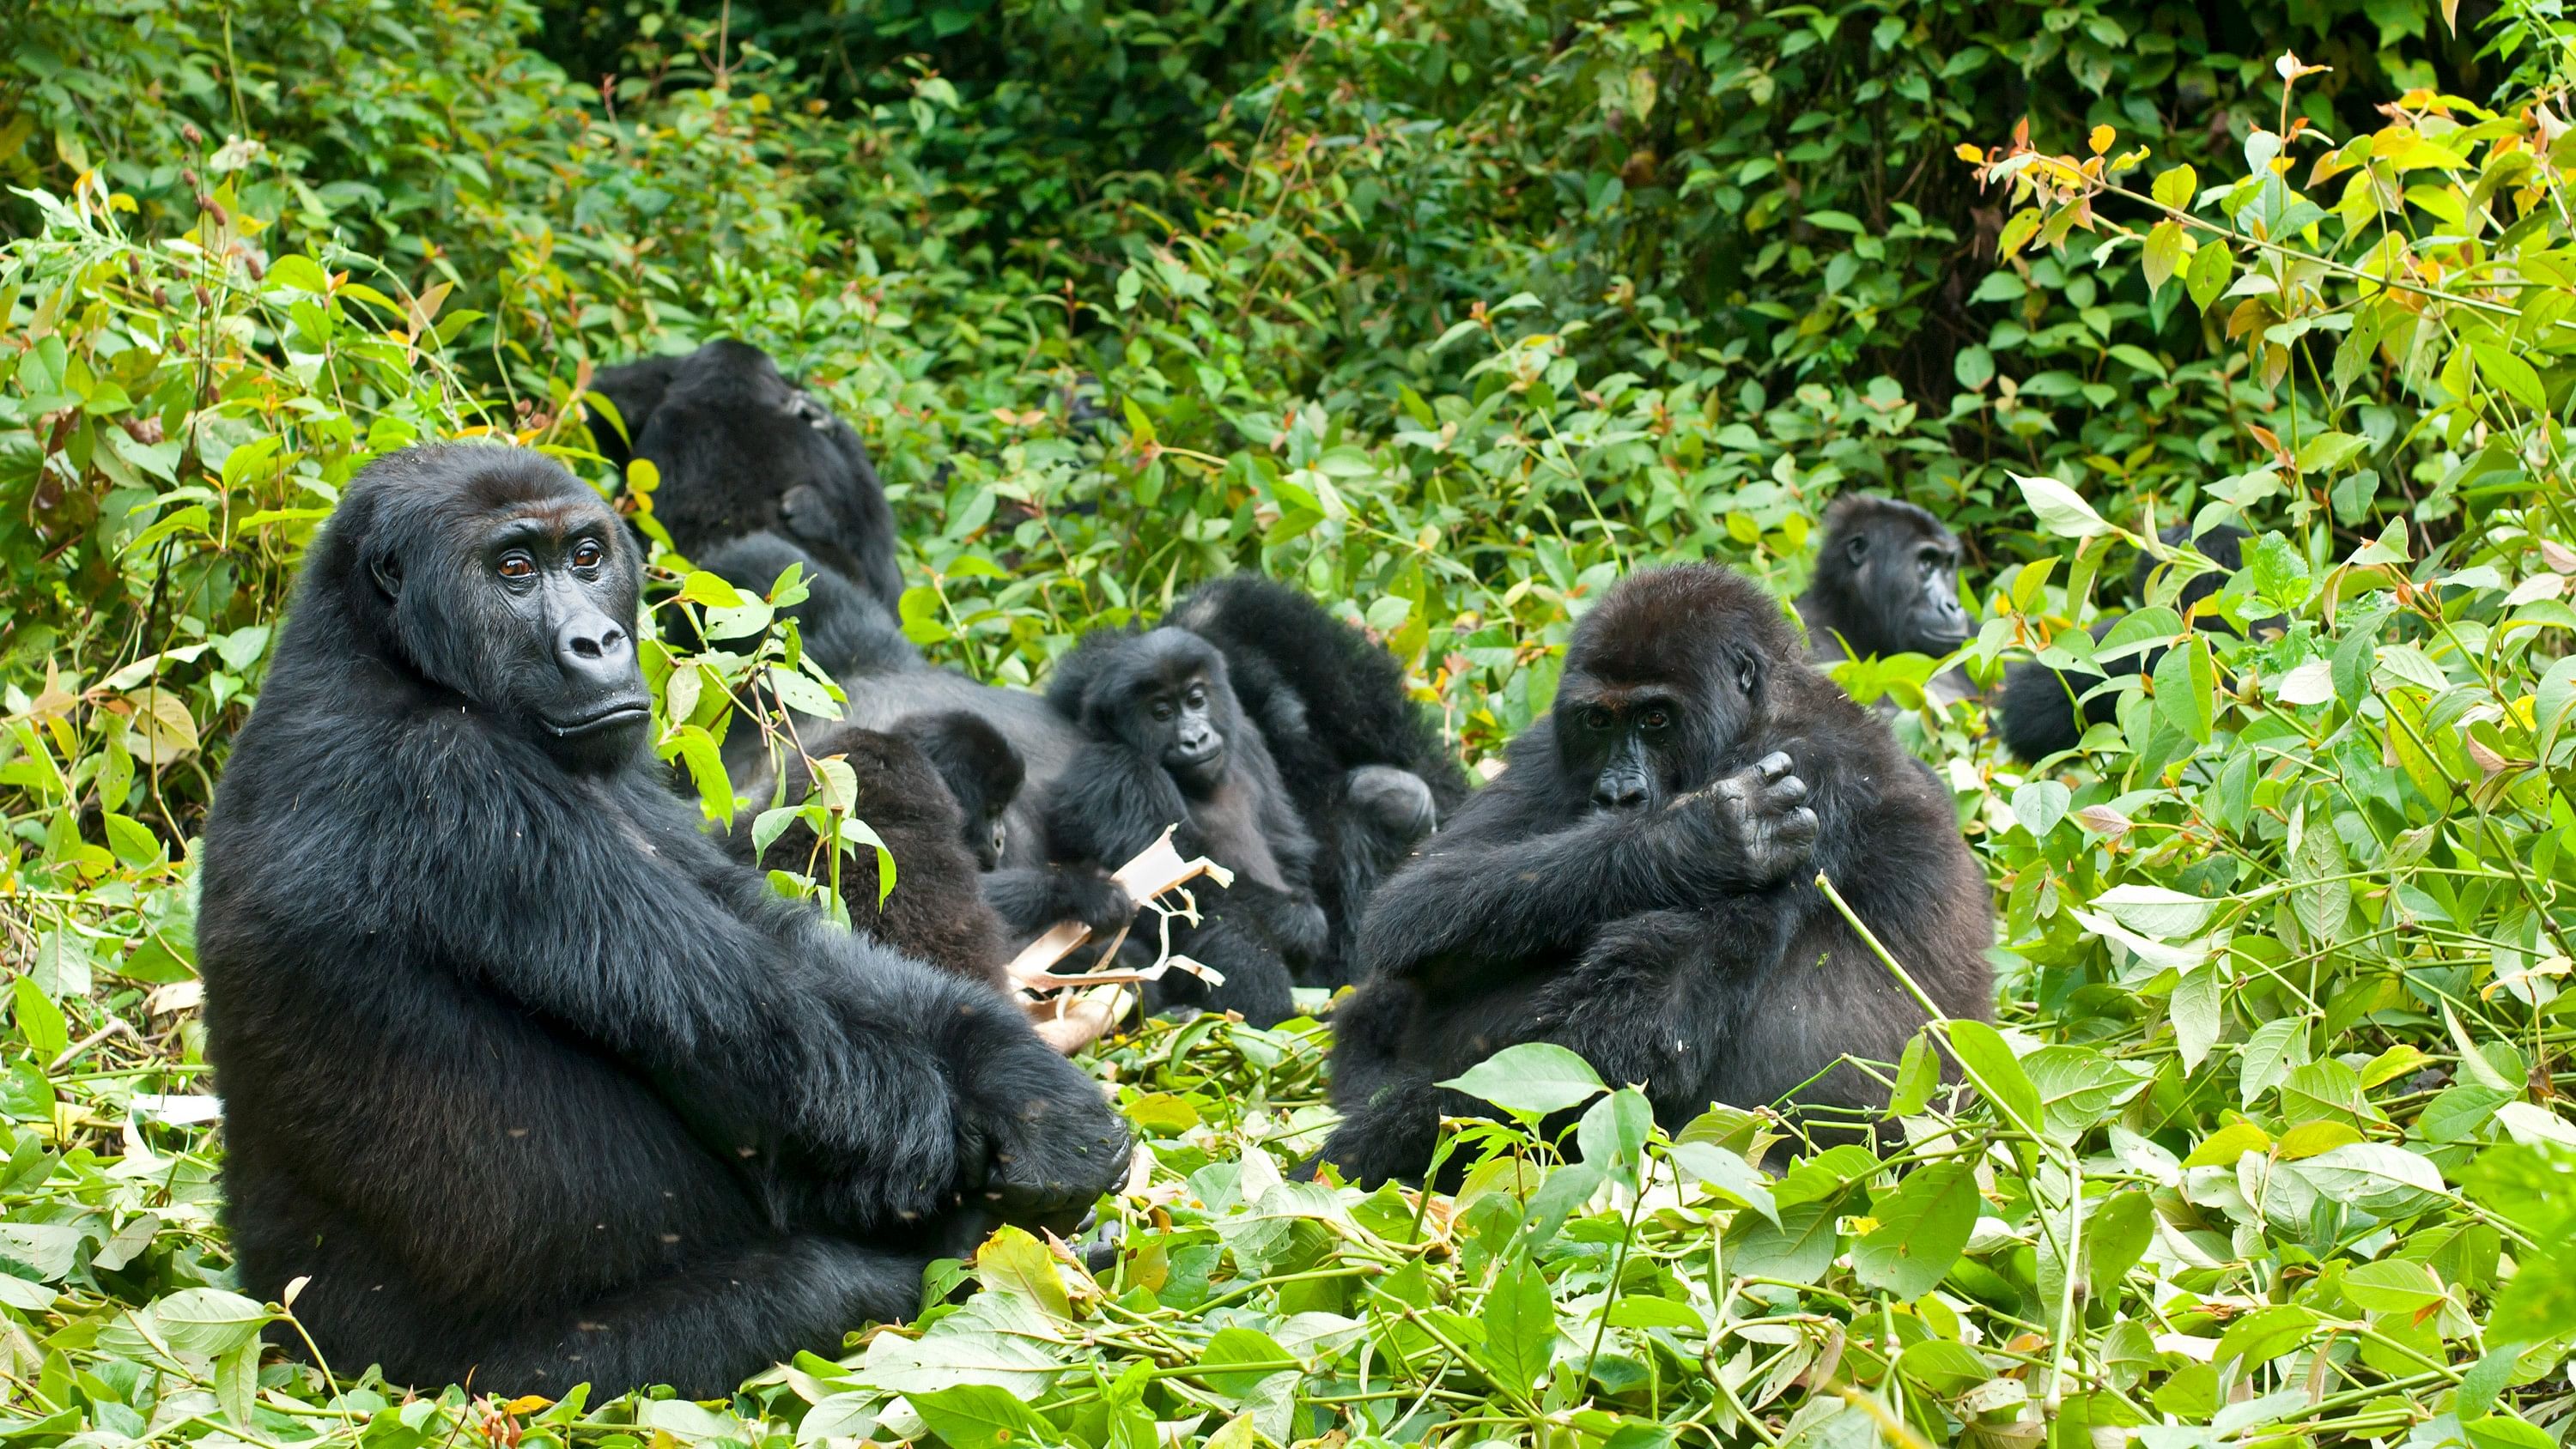 <div class="paragraphs"><p>Representative image showing gorillas.</p></div>